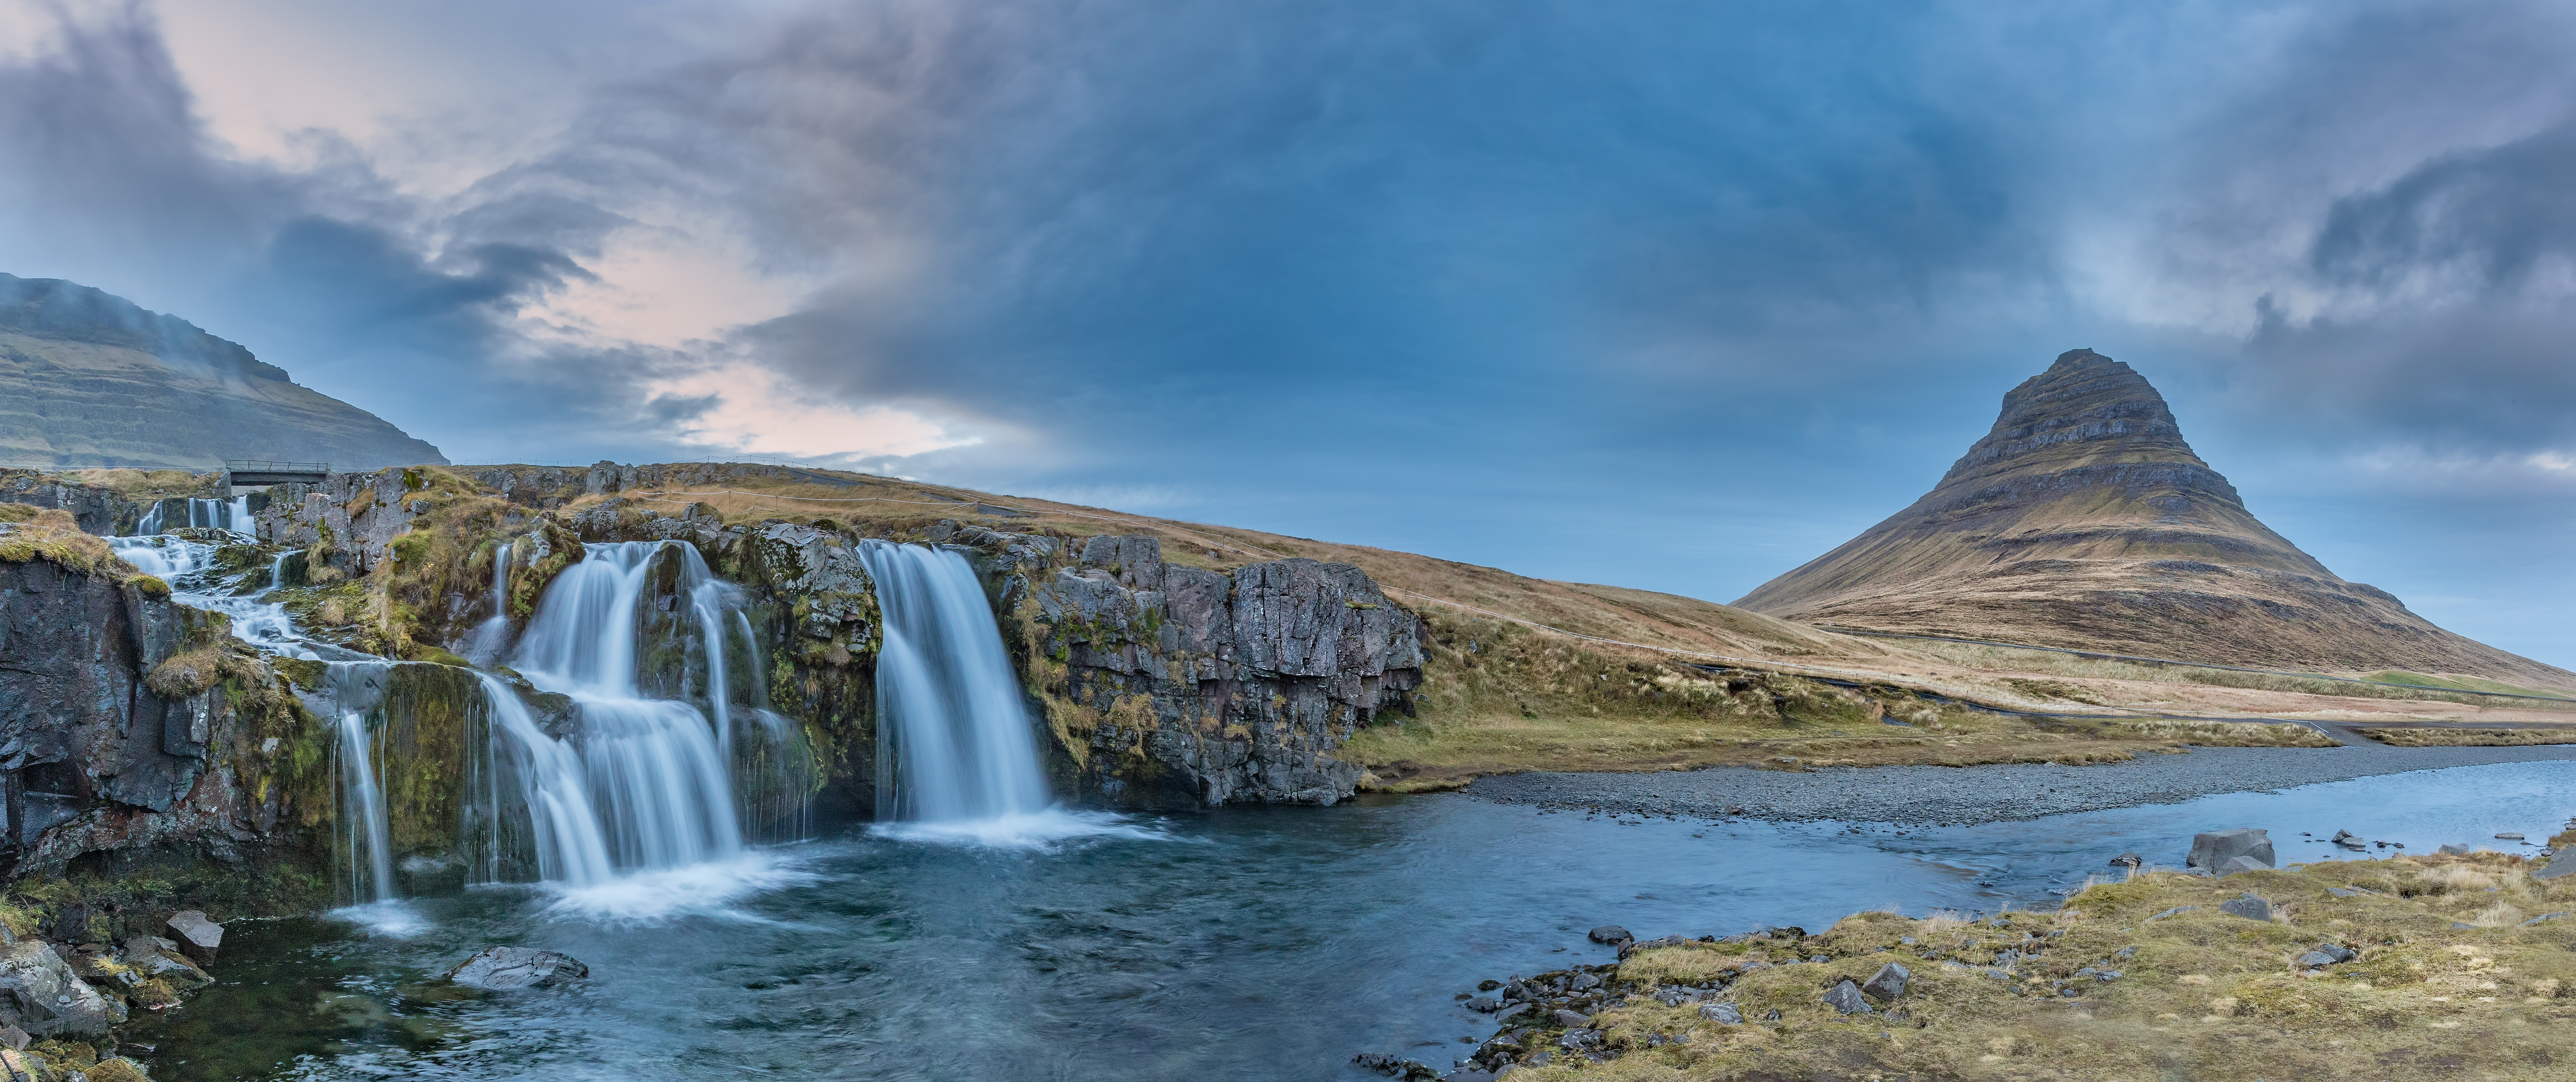 Kirkjufell Waterfall is located on the Snaefellnes Peninsula, Iceland.